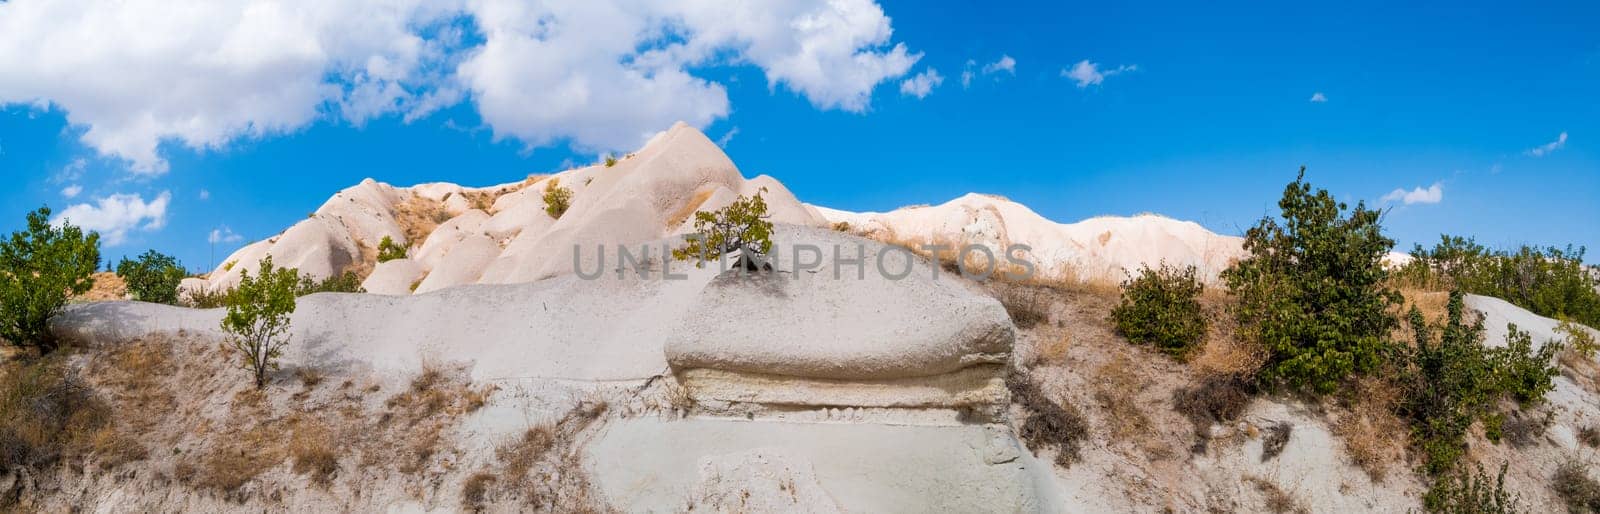 Sand mountain under clear blue sky by GekaSkr